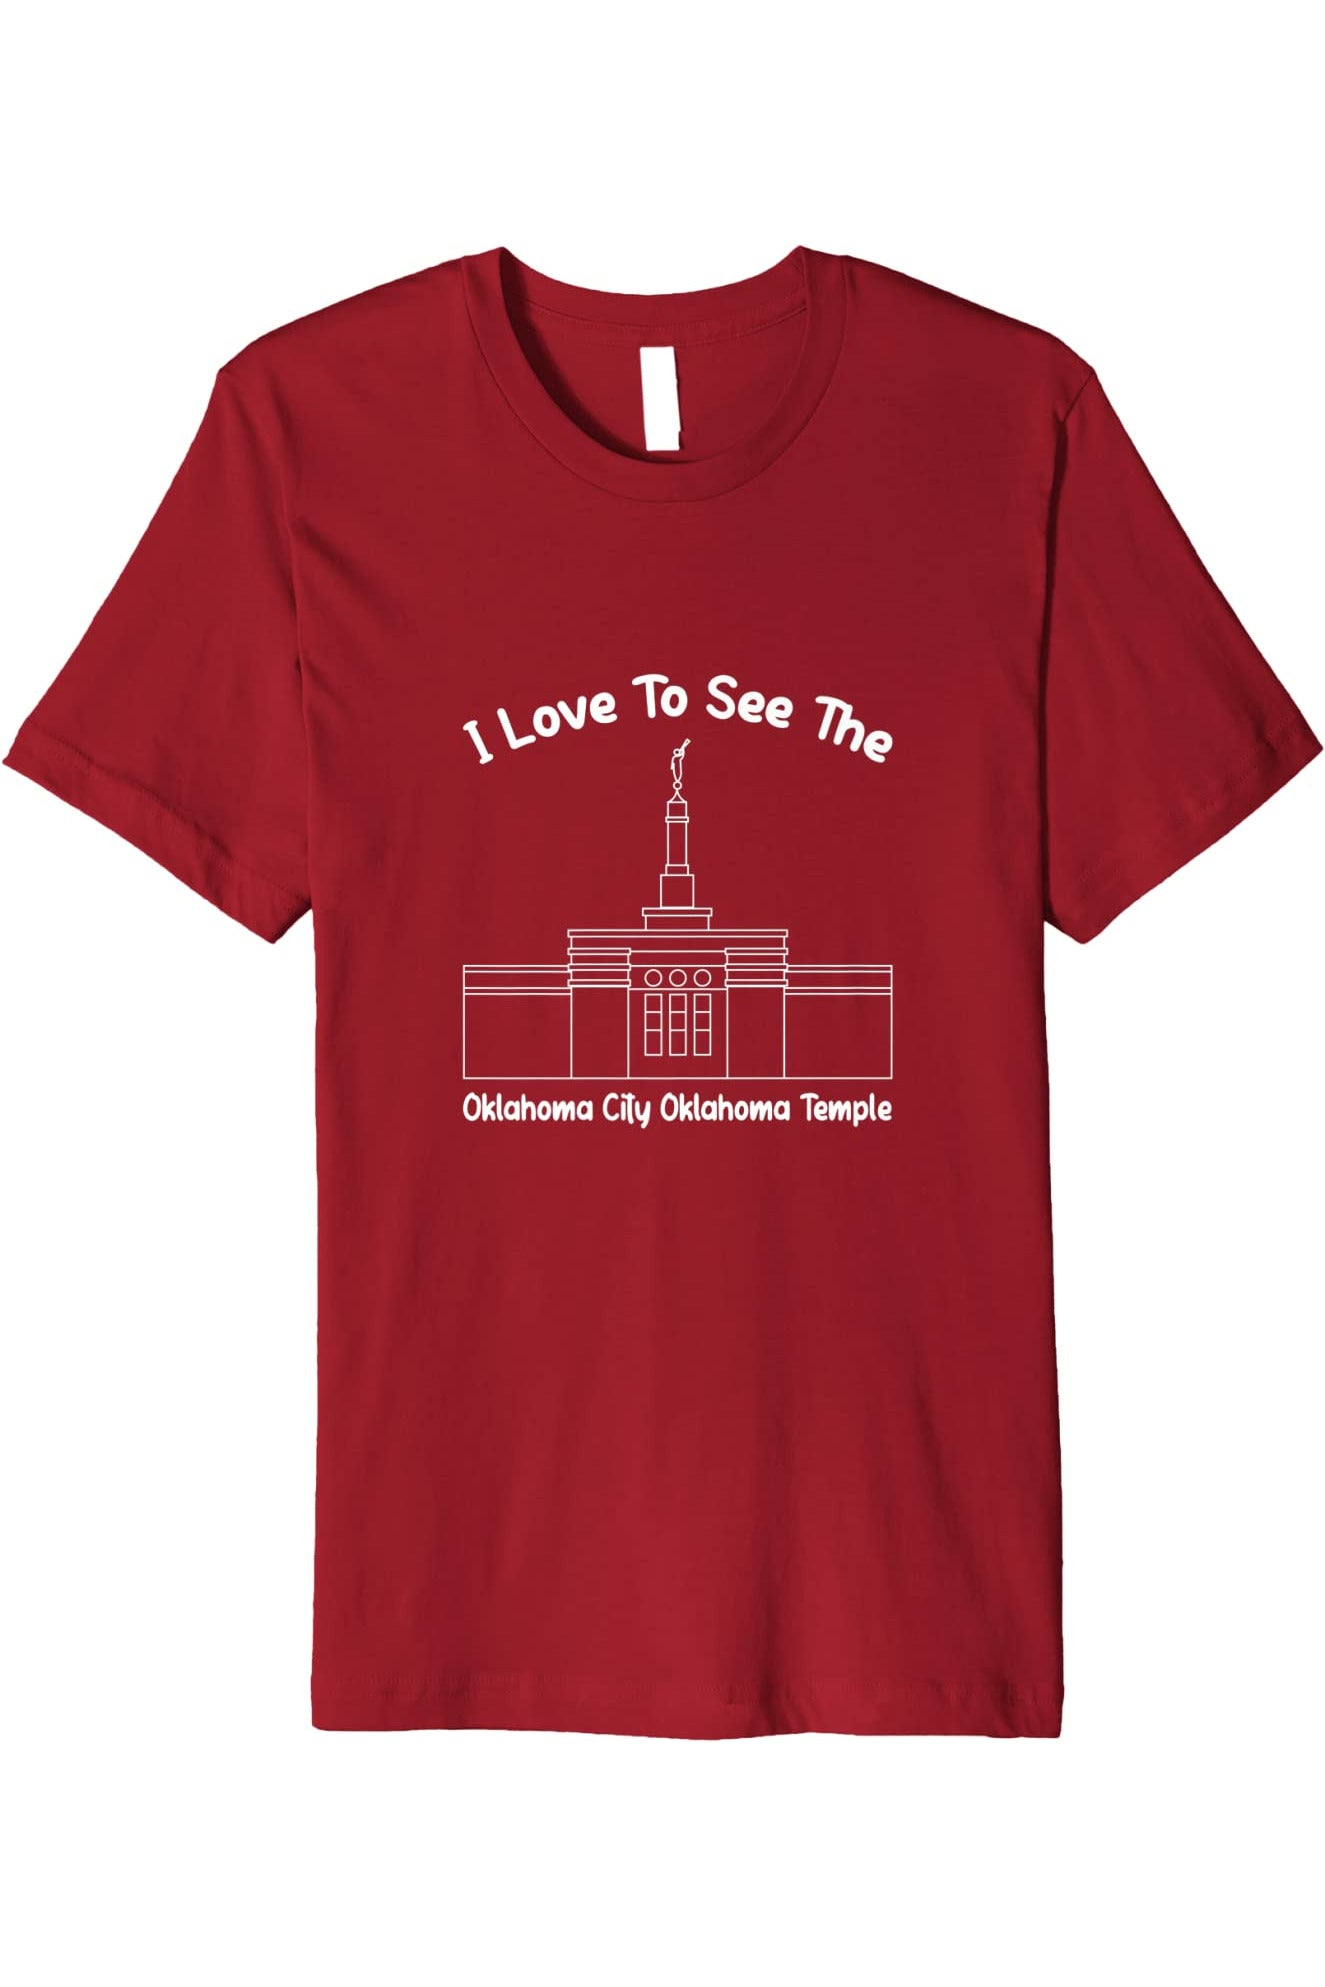 Oklahoma City Oklahoma Temple T-Shirt - Premium - Primary Style (English) US